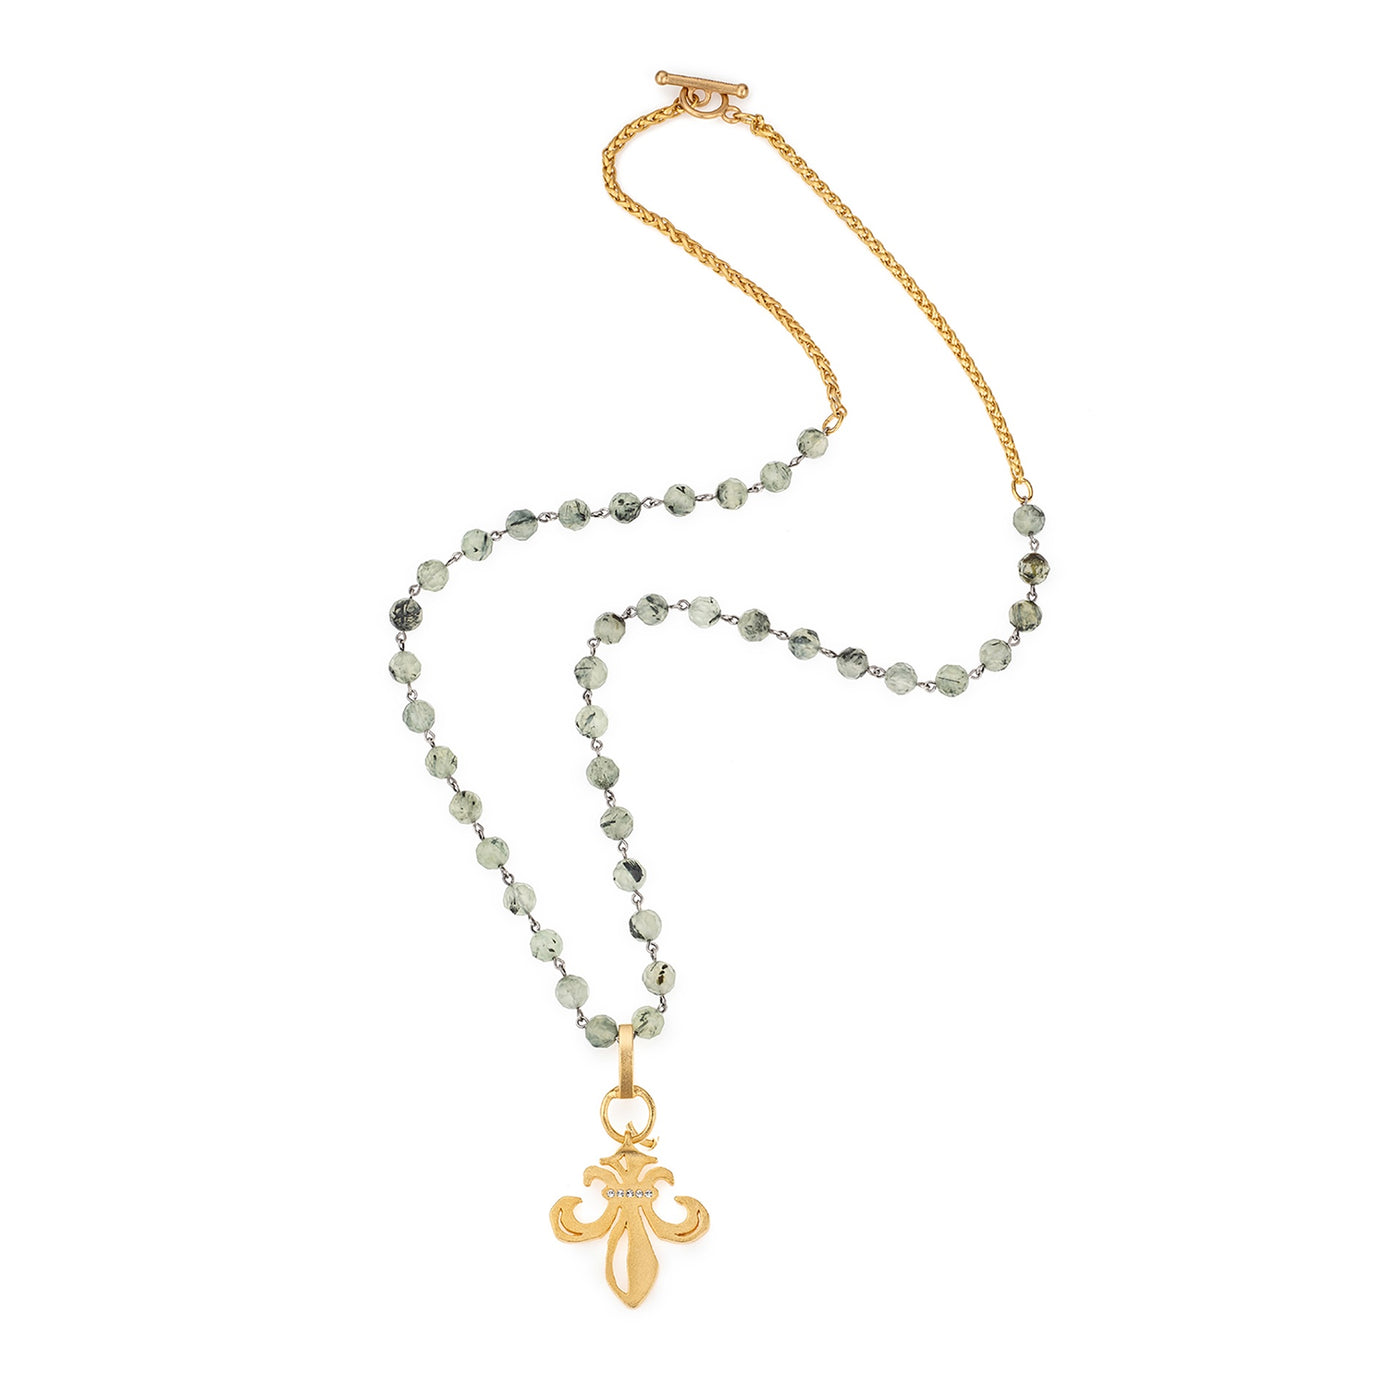 32" Prehnite & 24k Gold Plated Chain Necklace with Grande Fleur Pendant